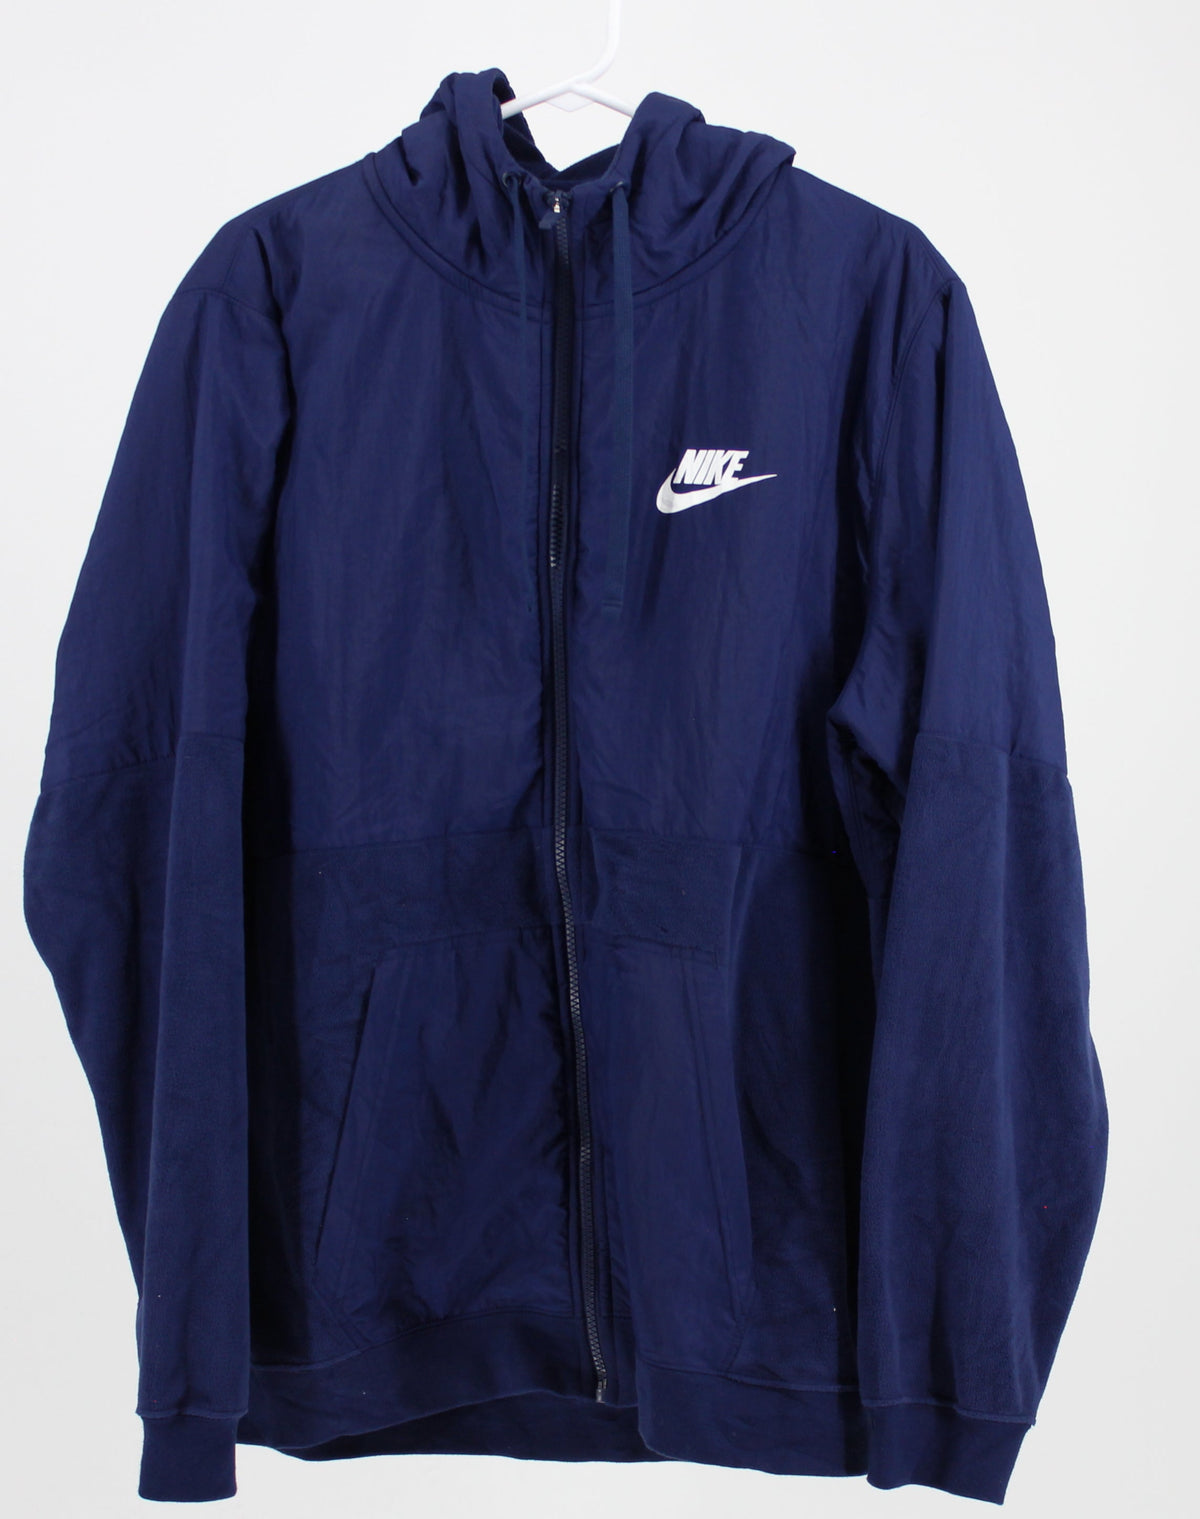 Nike Blue Nylon Zip Up Hooded Windbreaker with White Logo